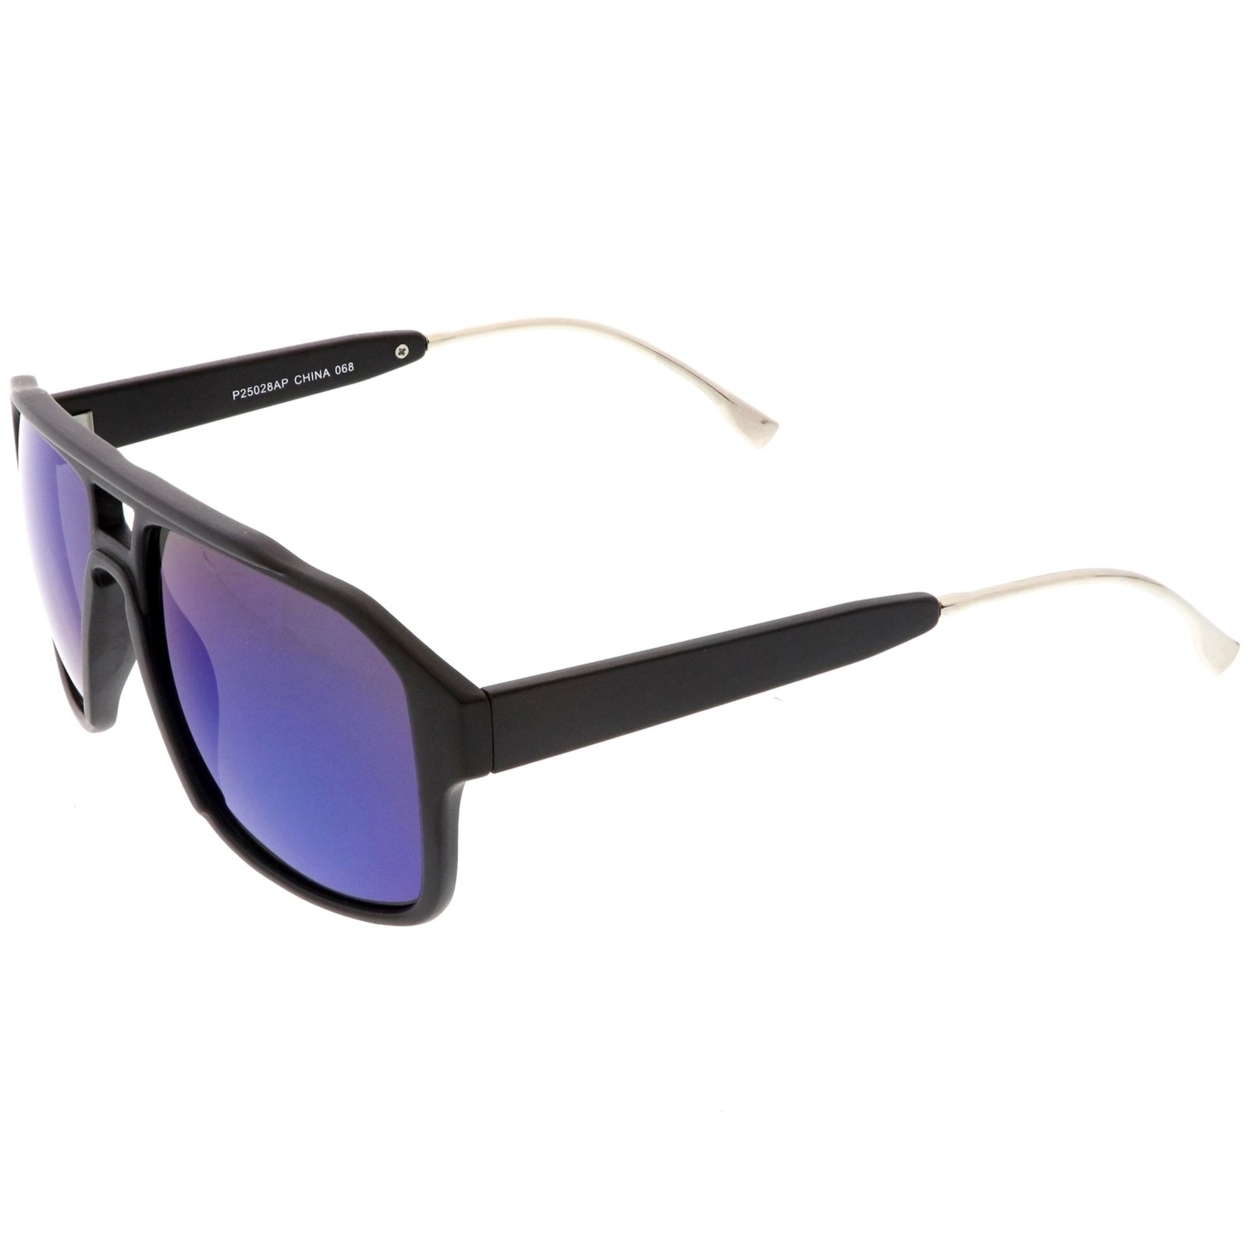 Sporty Aviator Sunglasses Flat Top Keyhole Nose Bridge Square Mirrored Lens 55mm - Matte Black / Gold Mirror